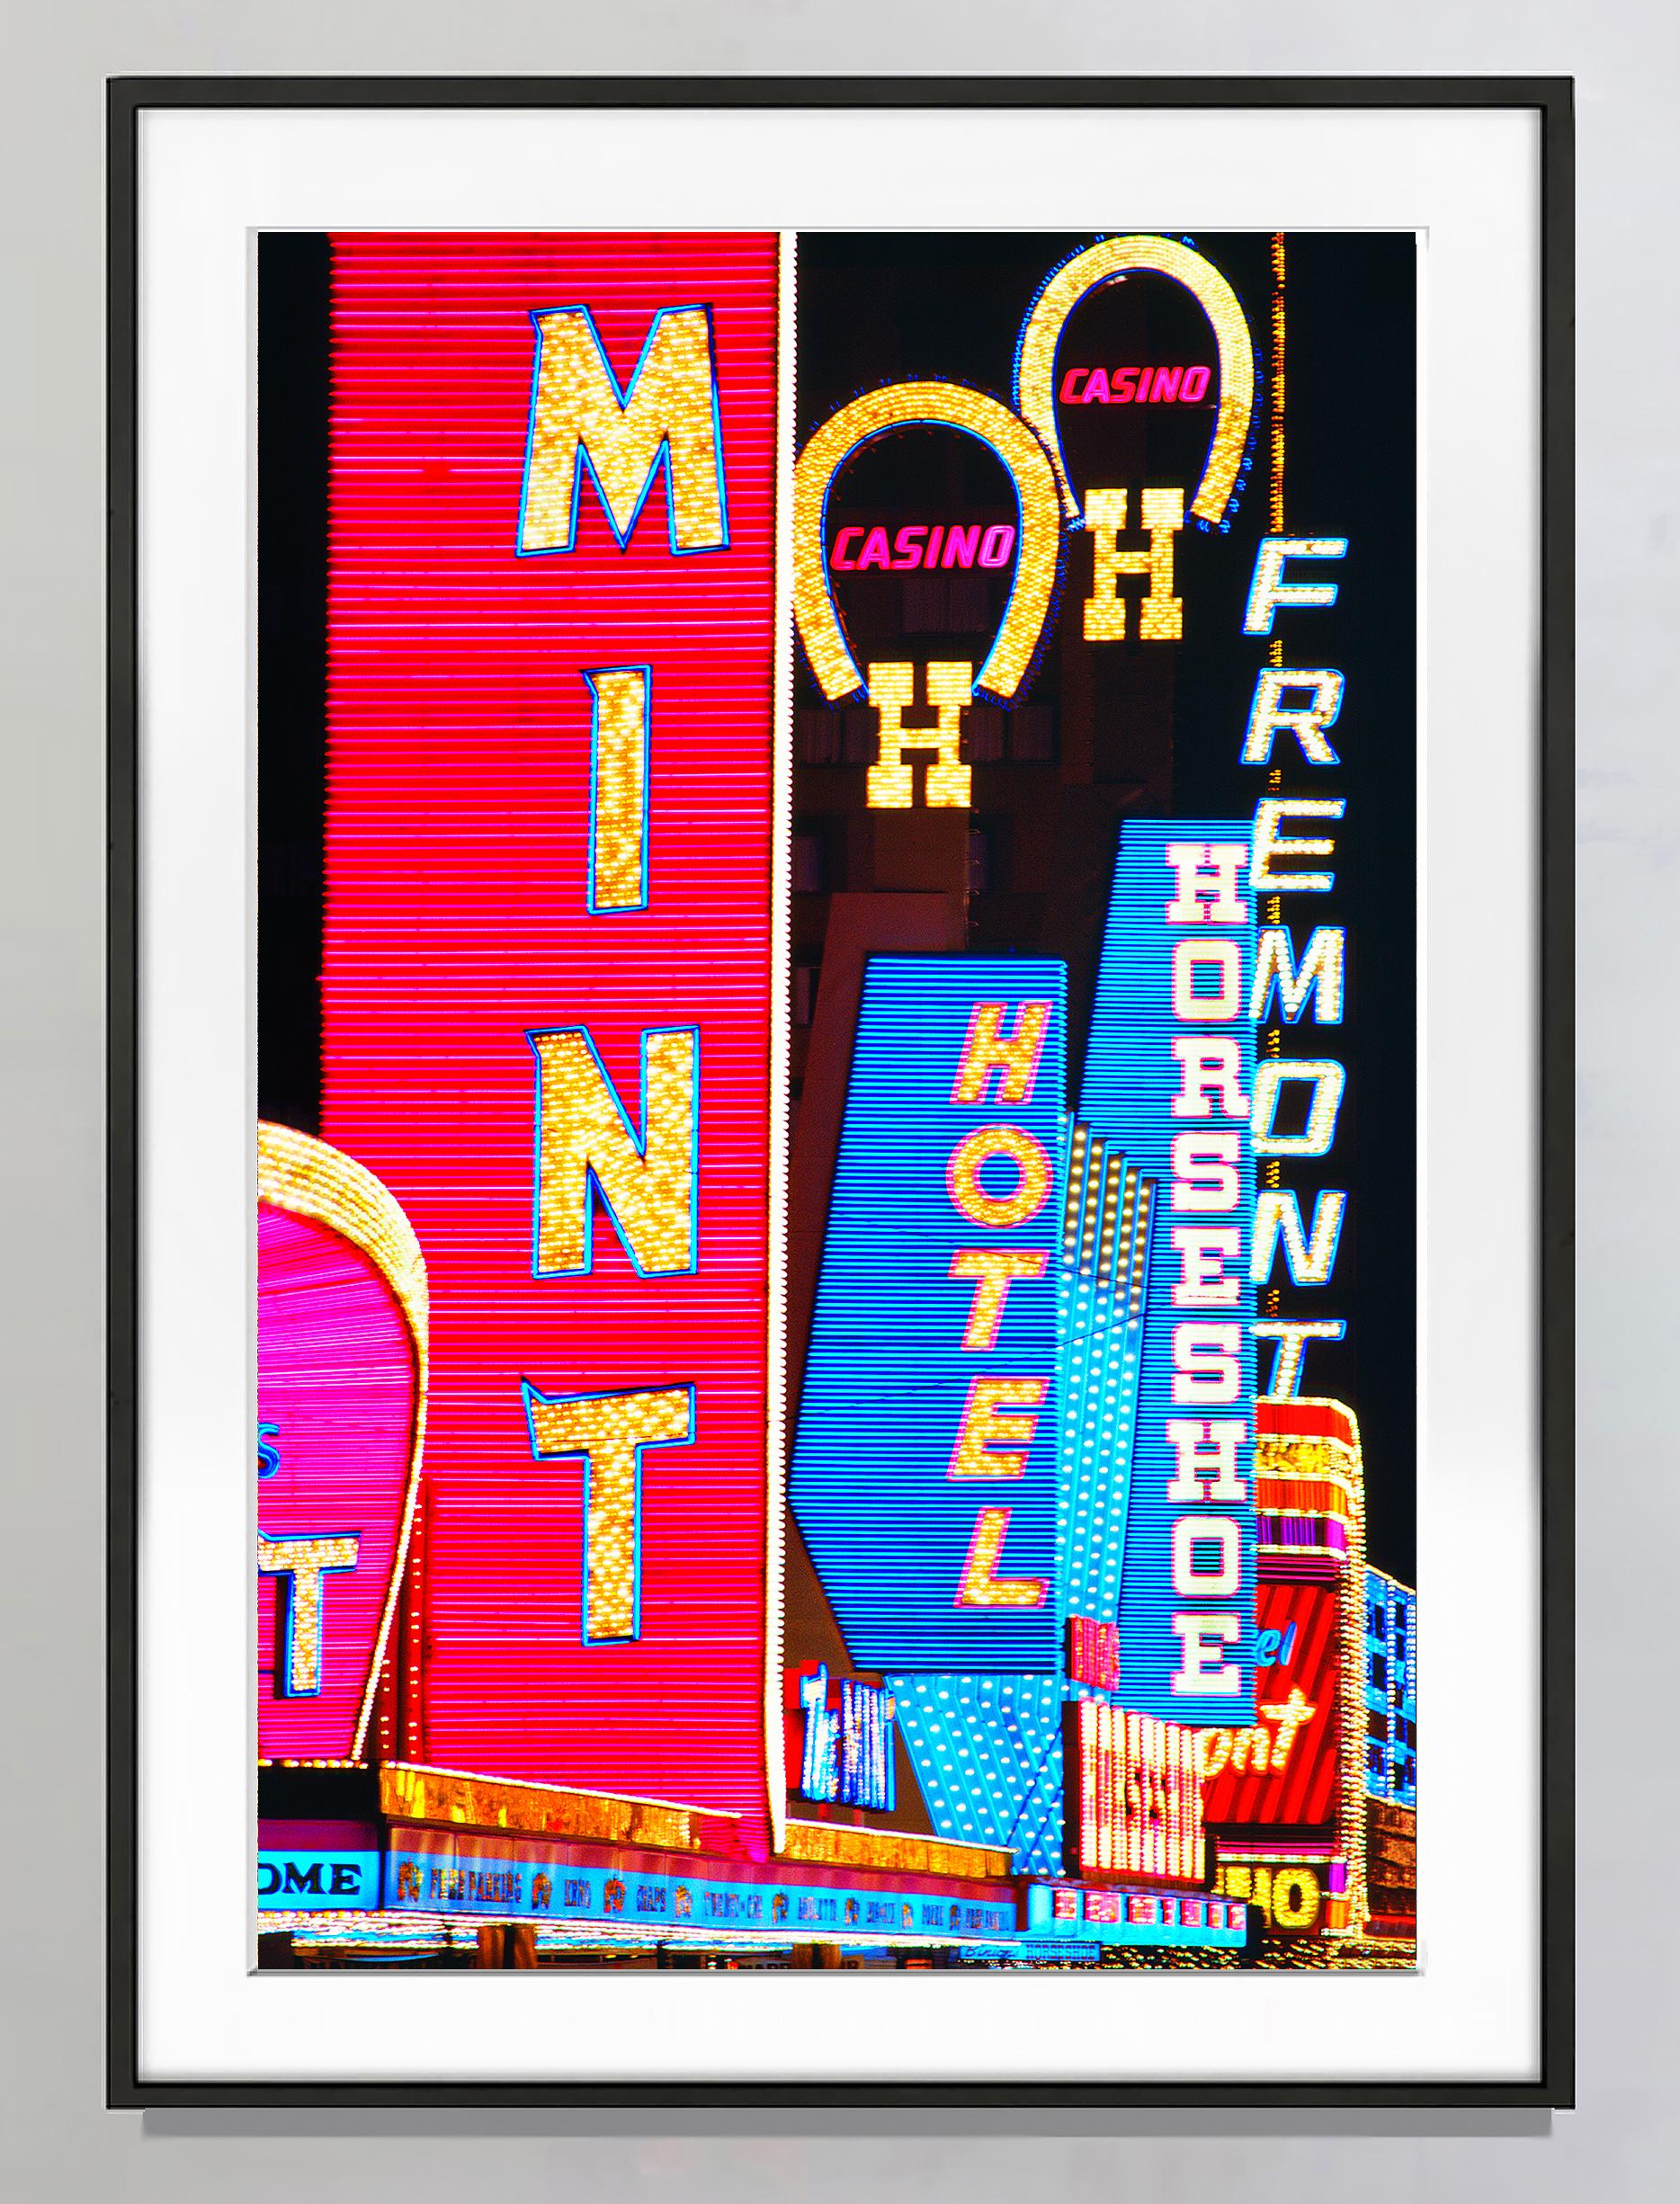 Vintage Las Vegas- Fremont Street Neon Signs, The Mint,  Old Las Vegas - Photograph by Mitchell Funk